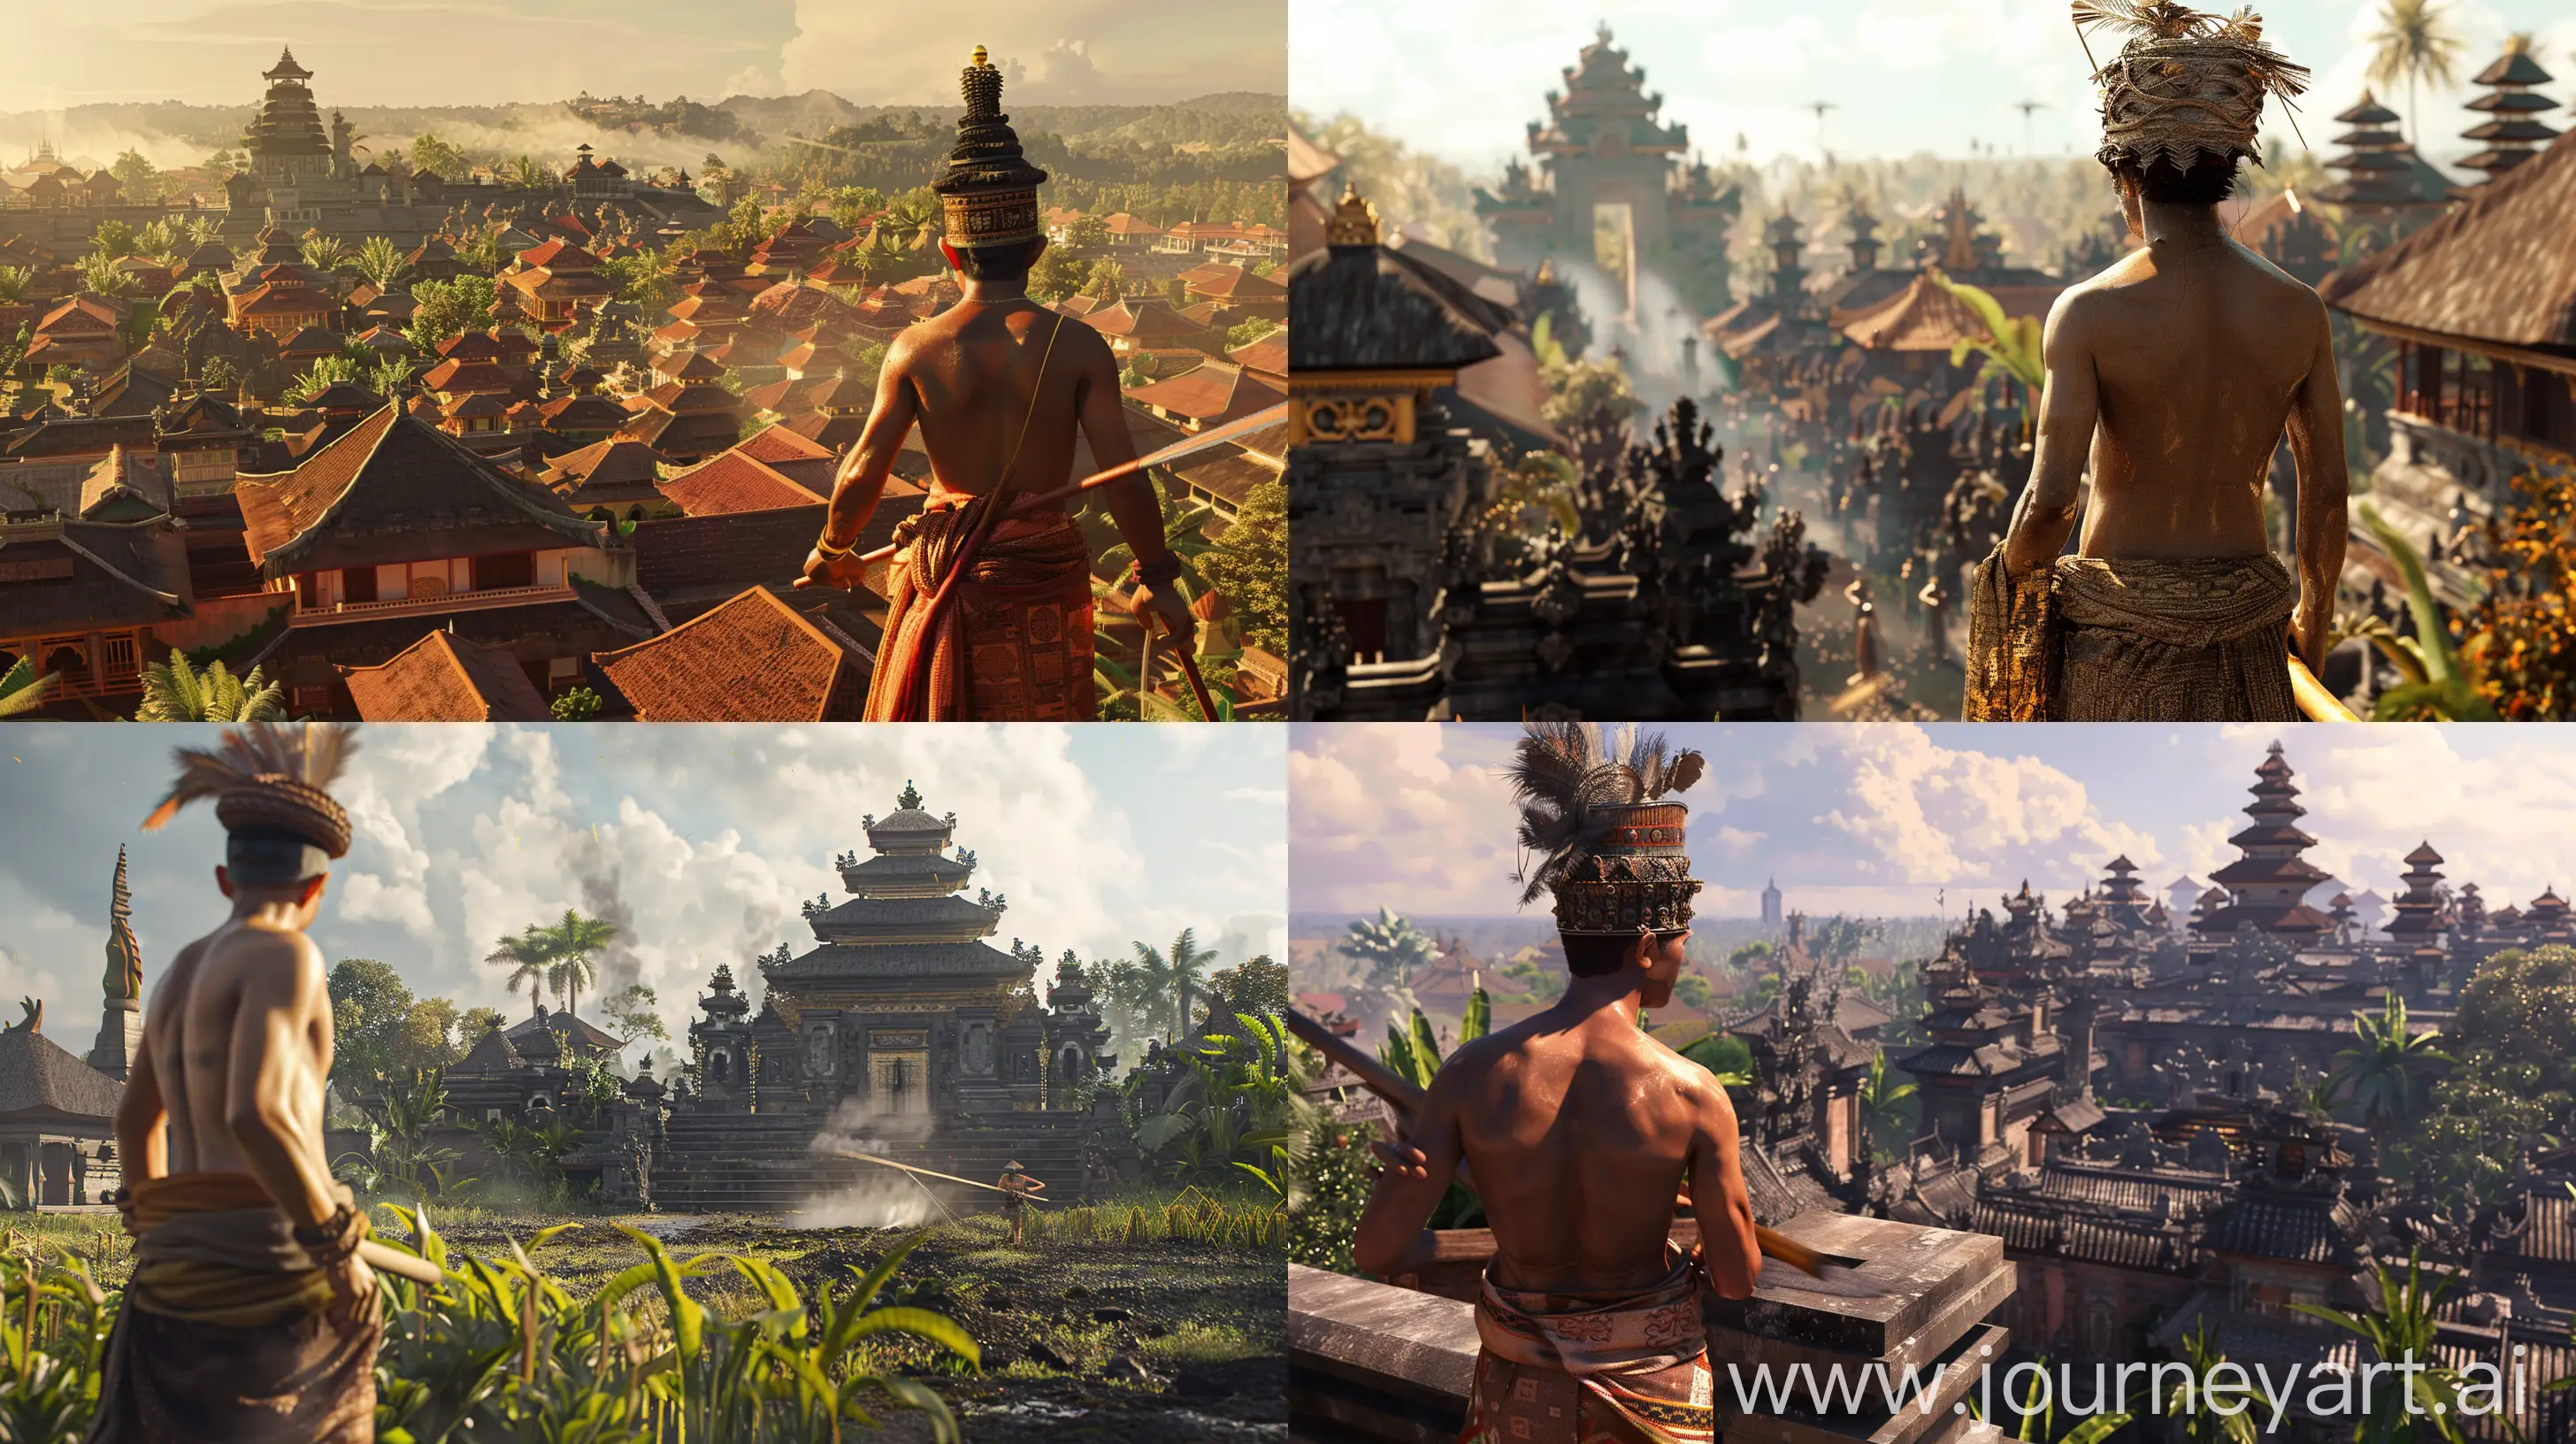 UltraRealistic-Indonesian-Sunda-Kingdom-with-Traditional-Balinese-Clothing